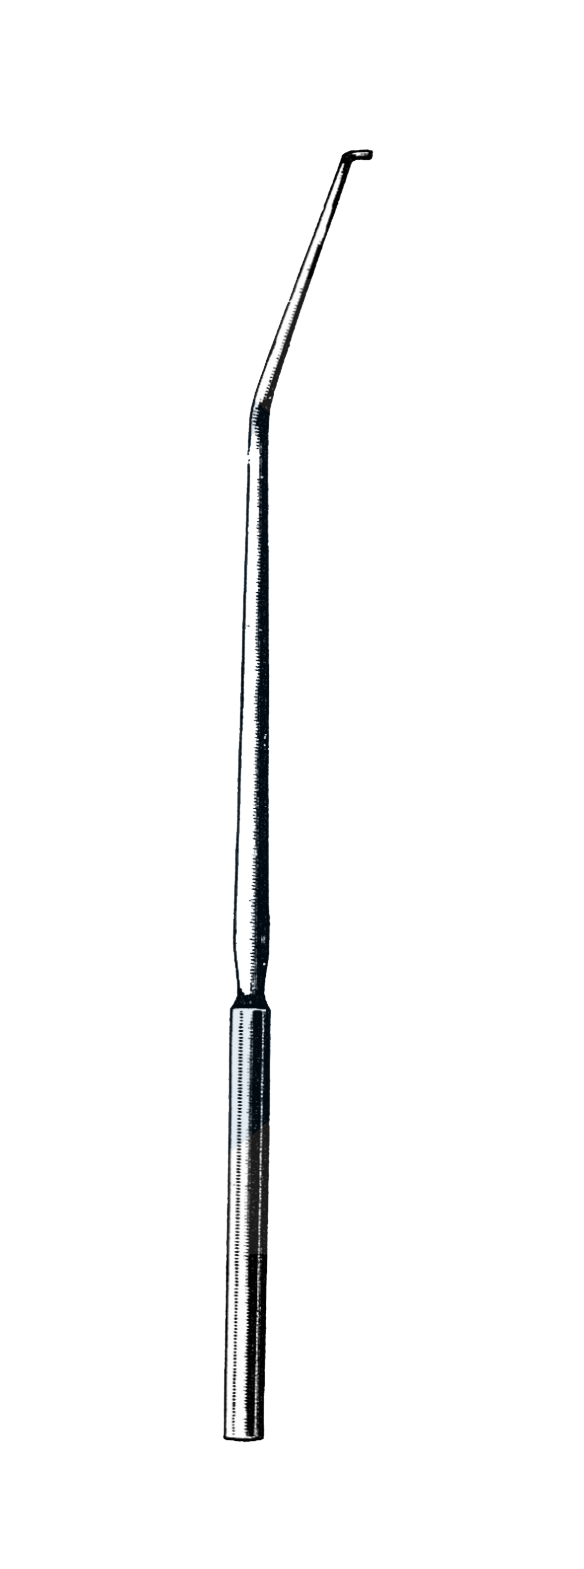 Dandy Nerve Hook, Angled Right 8" (20 cm) - Garana Industries